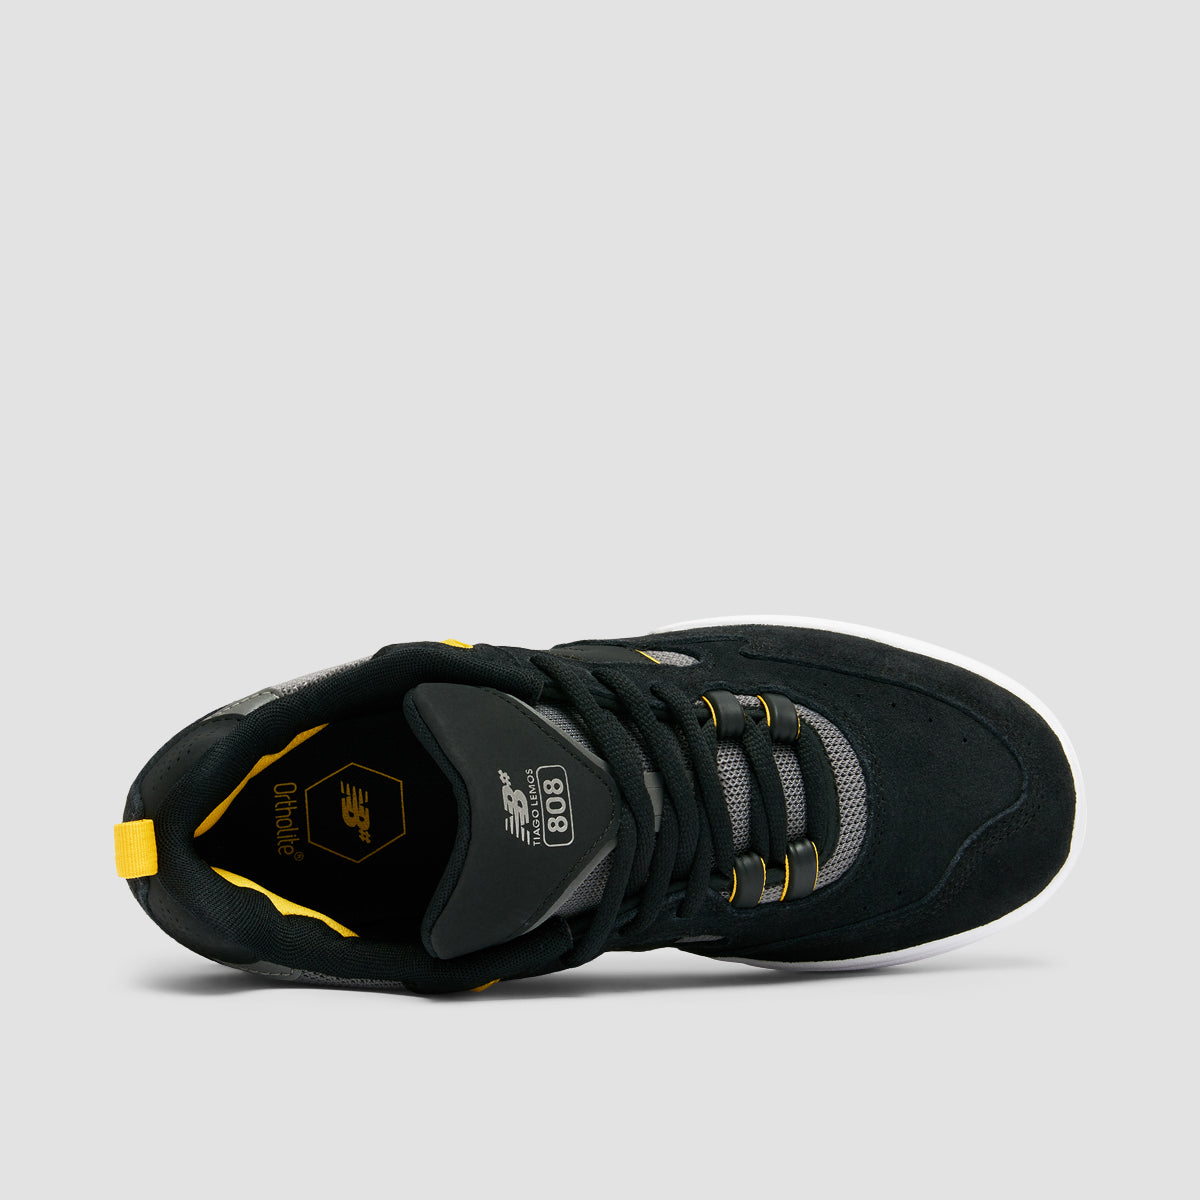 New Balance Numeric 808 Tiago Lemos Shoes - Black/Yellow